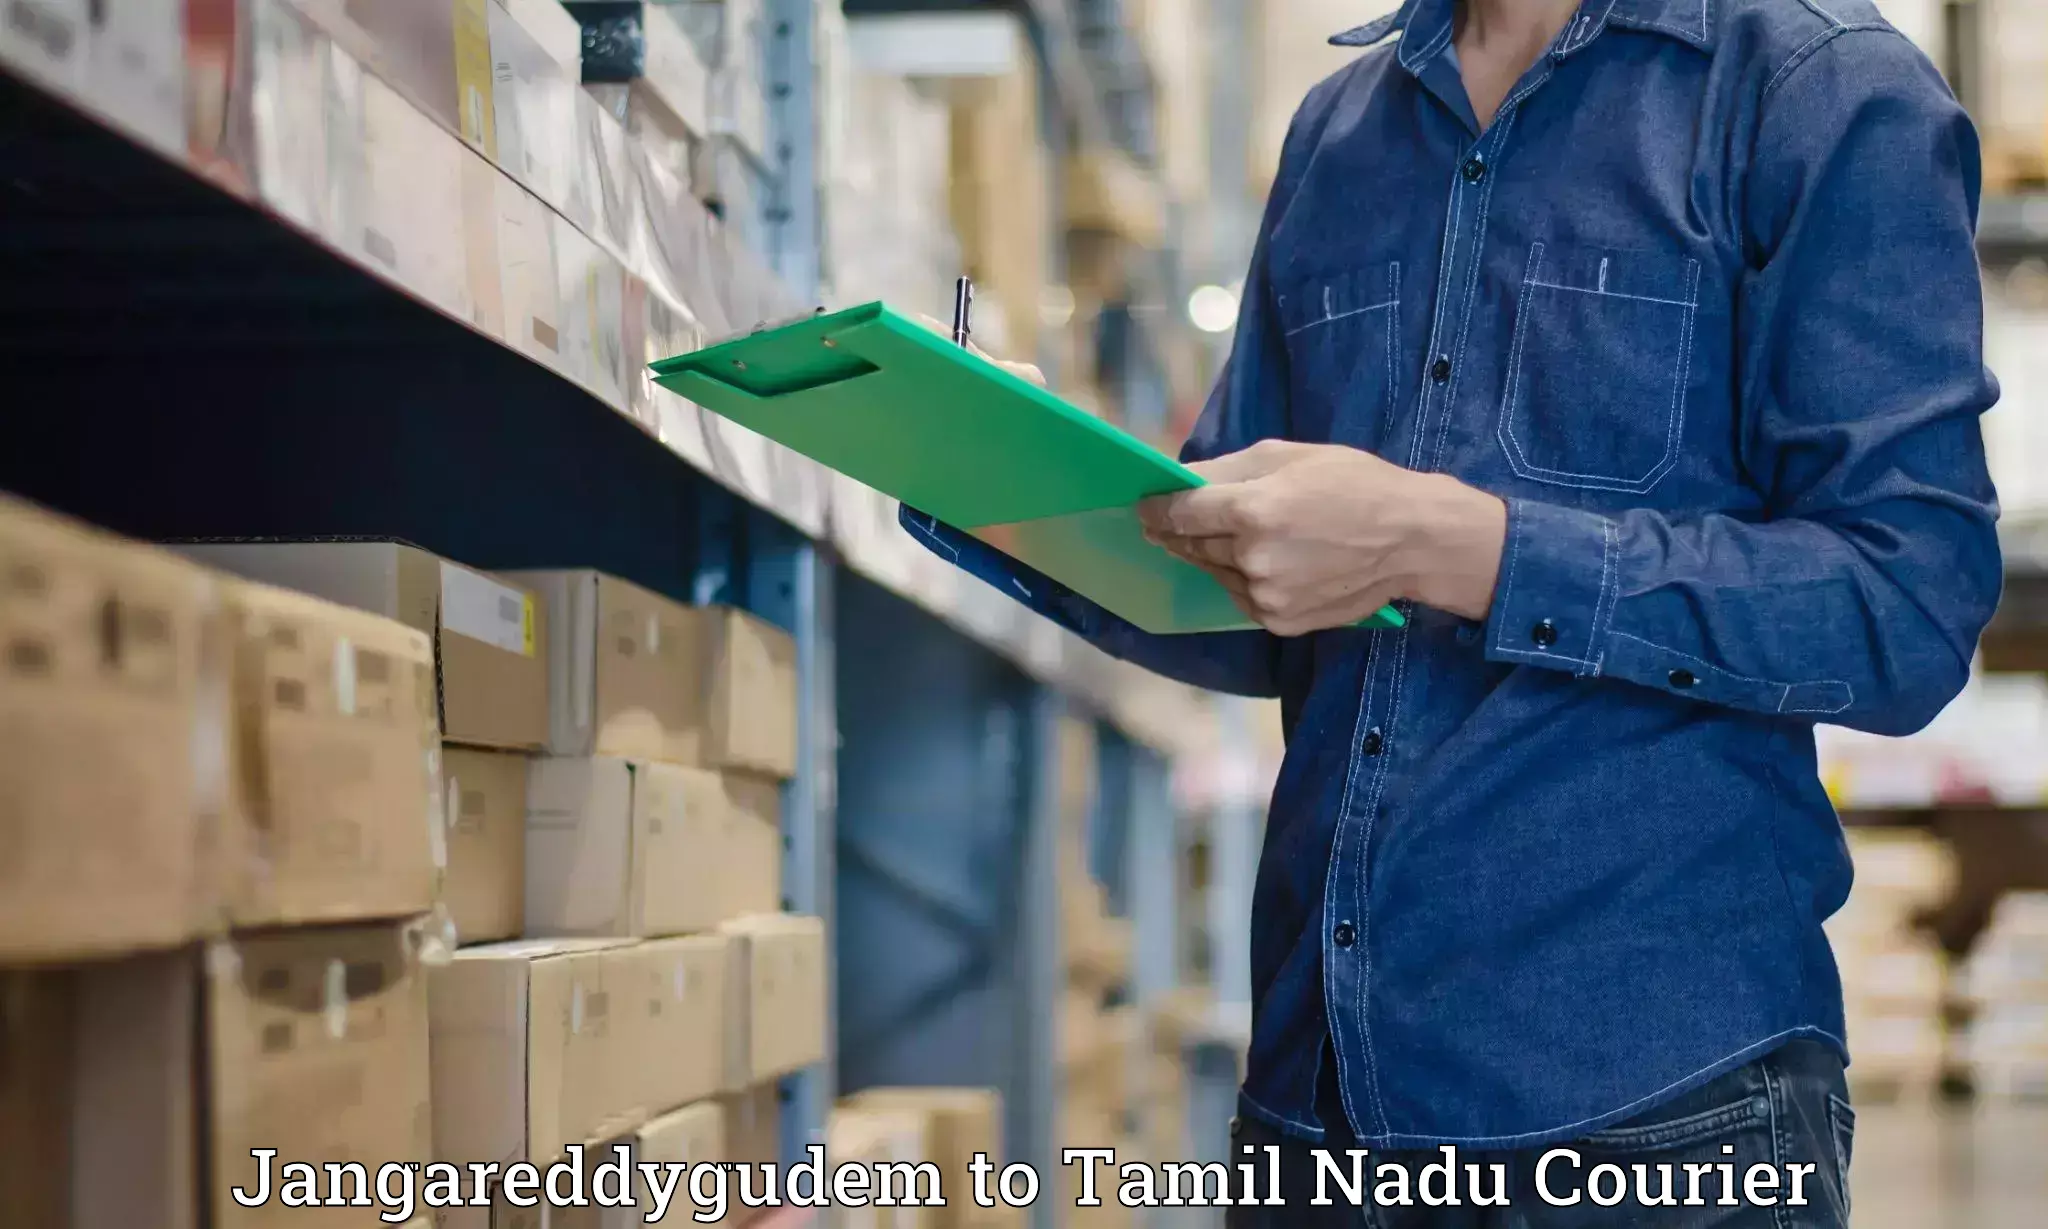 Reliable delivery network Jangareddygudem to Tamil Nadu